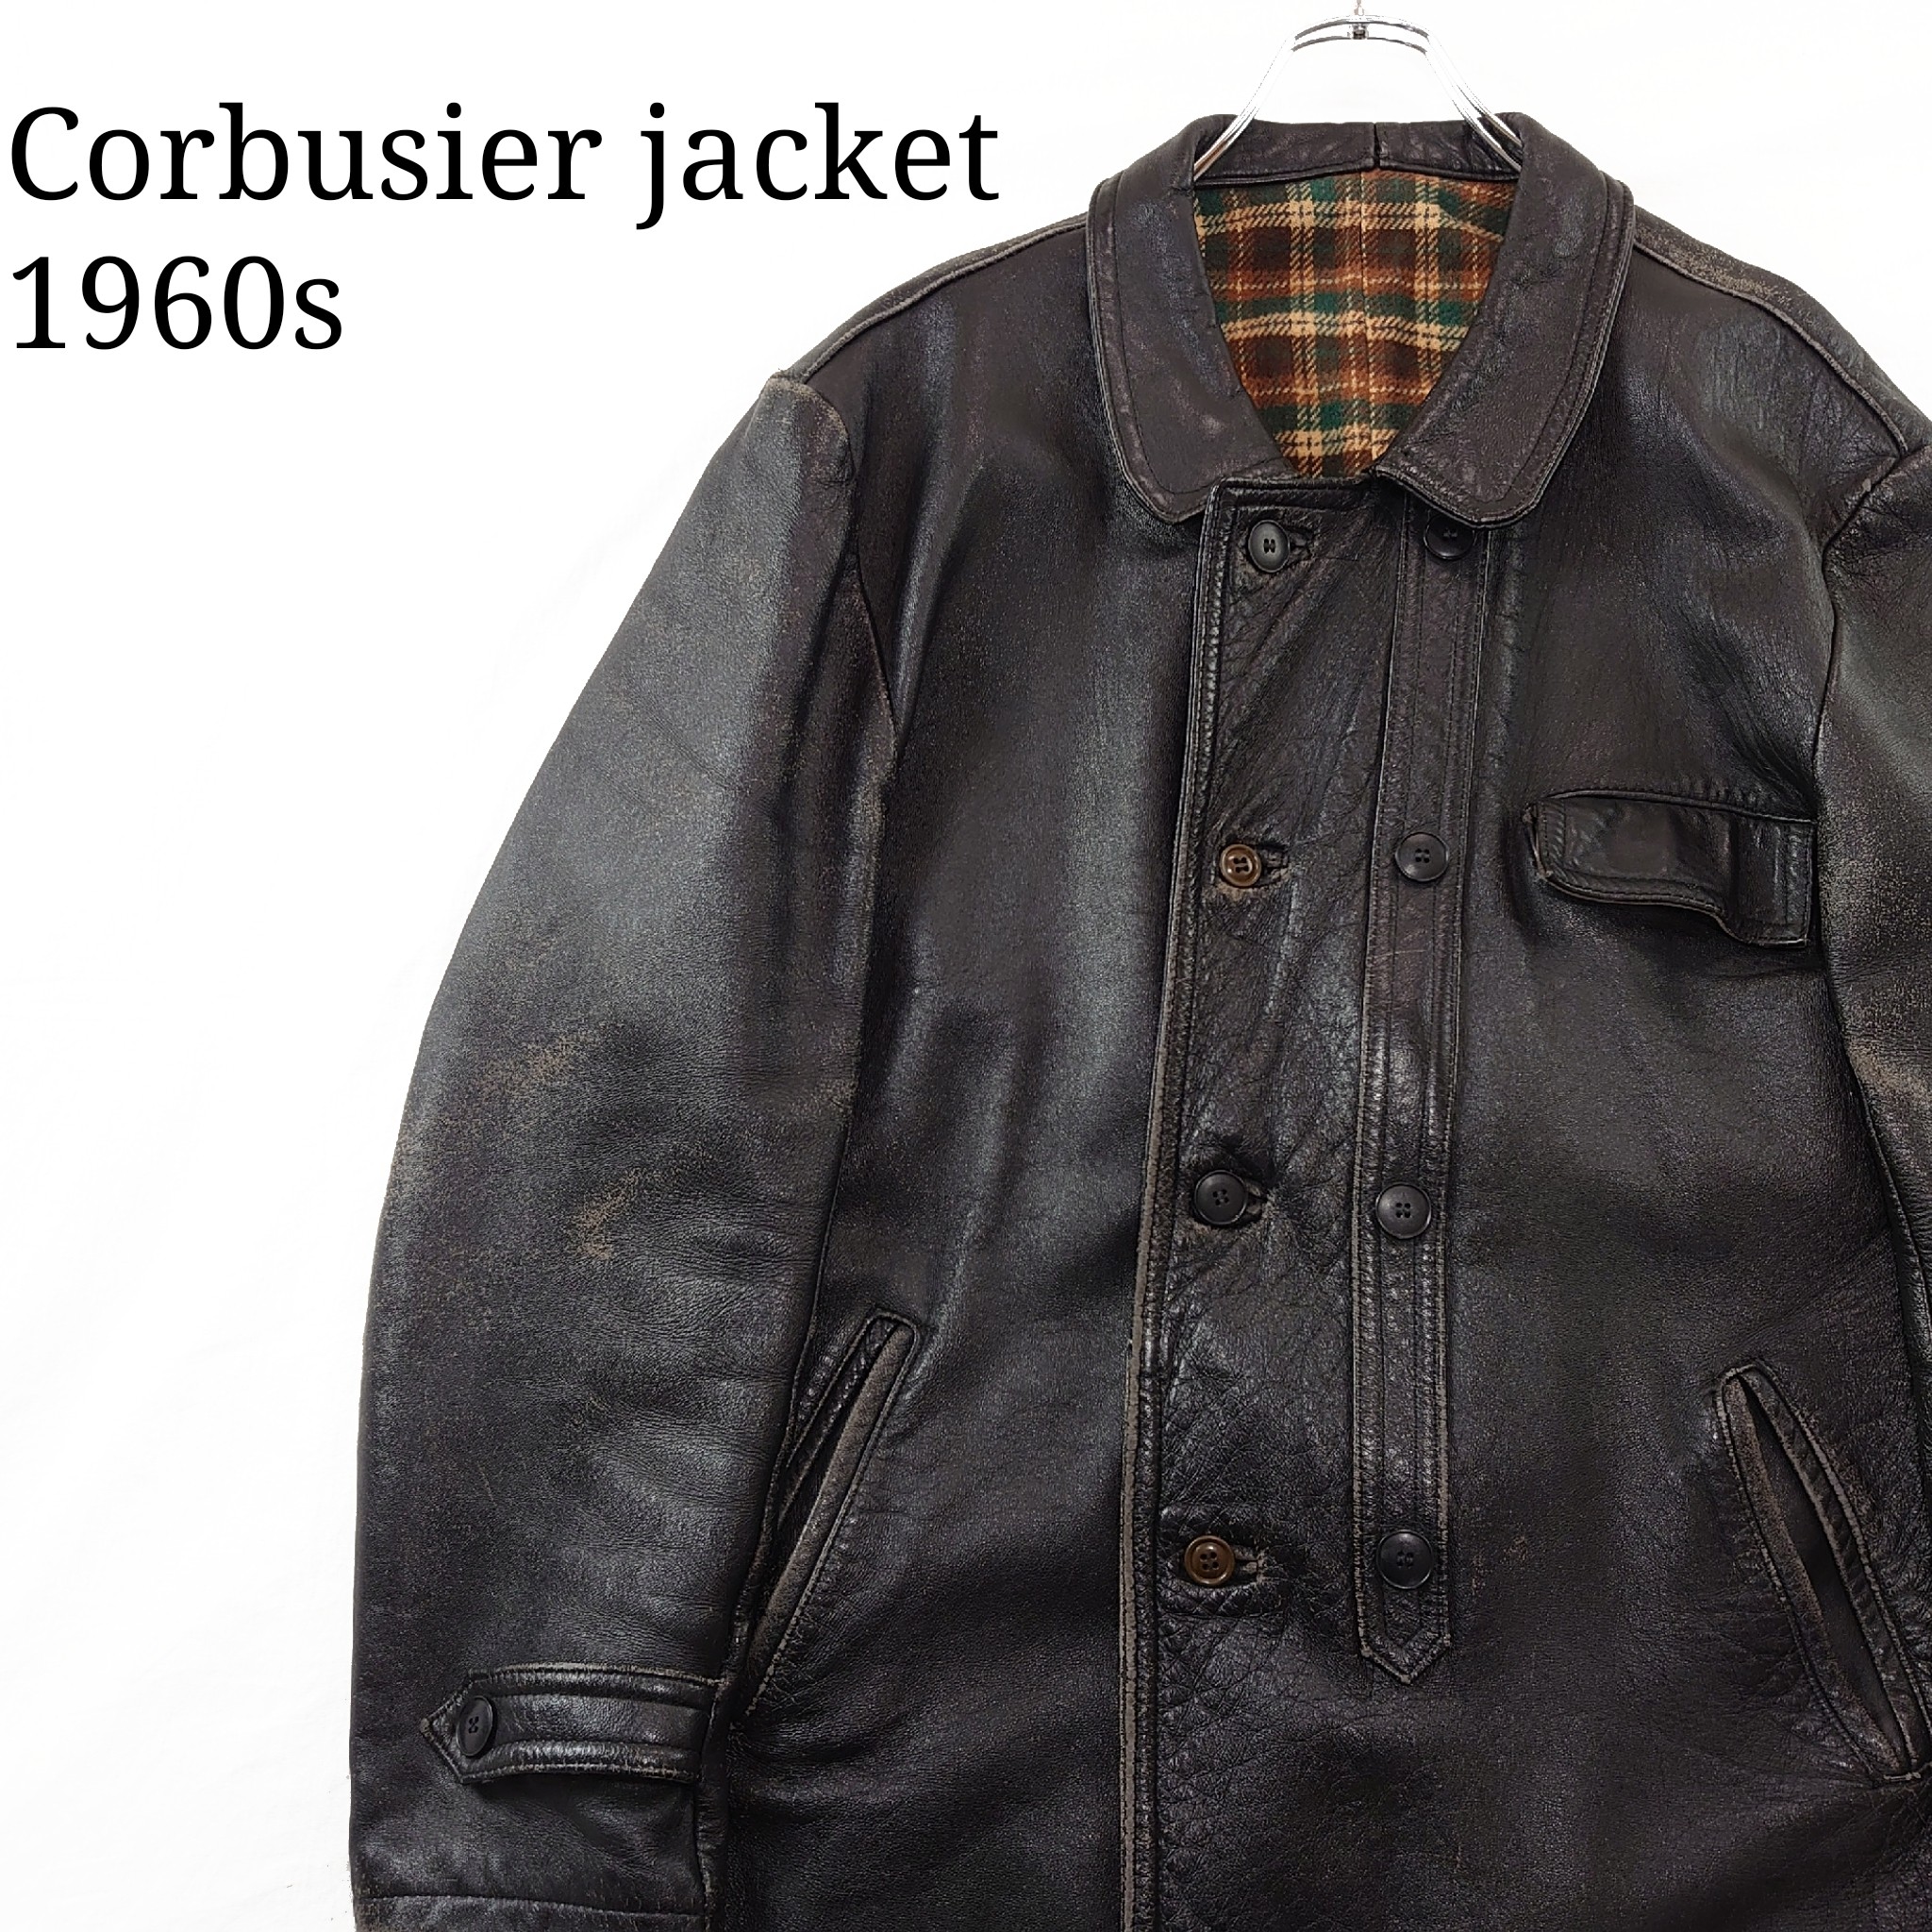 1960s】Corbusier jacket コルビジェジャケット GVF-